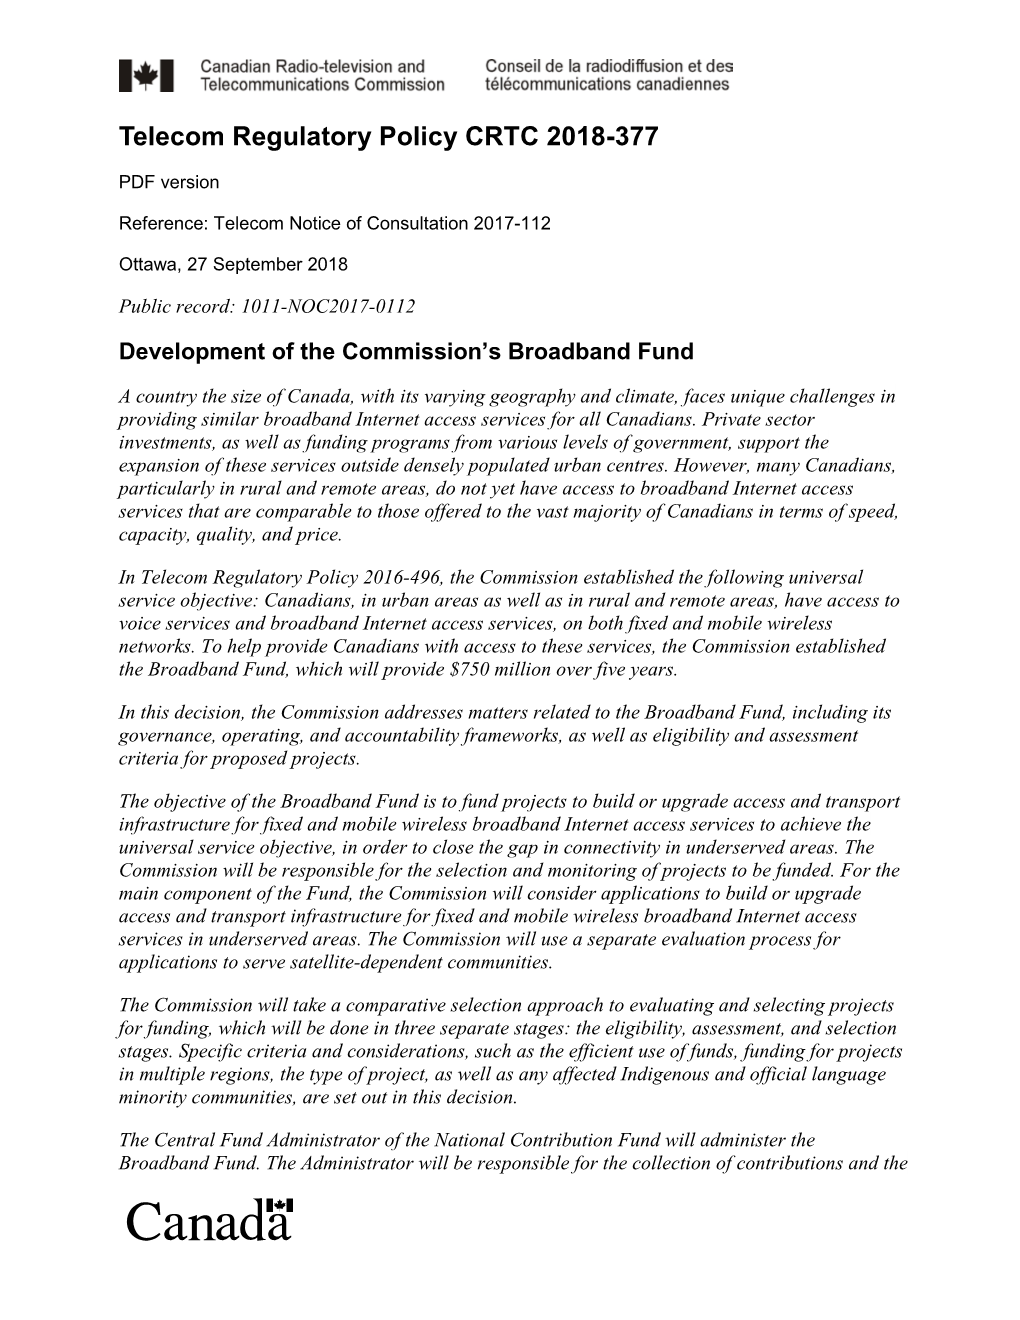 Development of the Commission's Broadband Fund